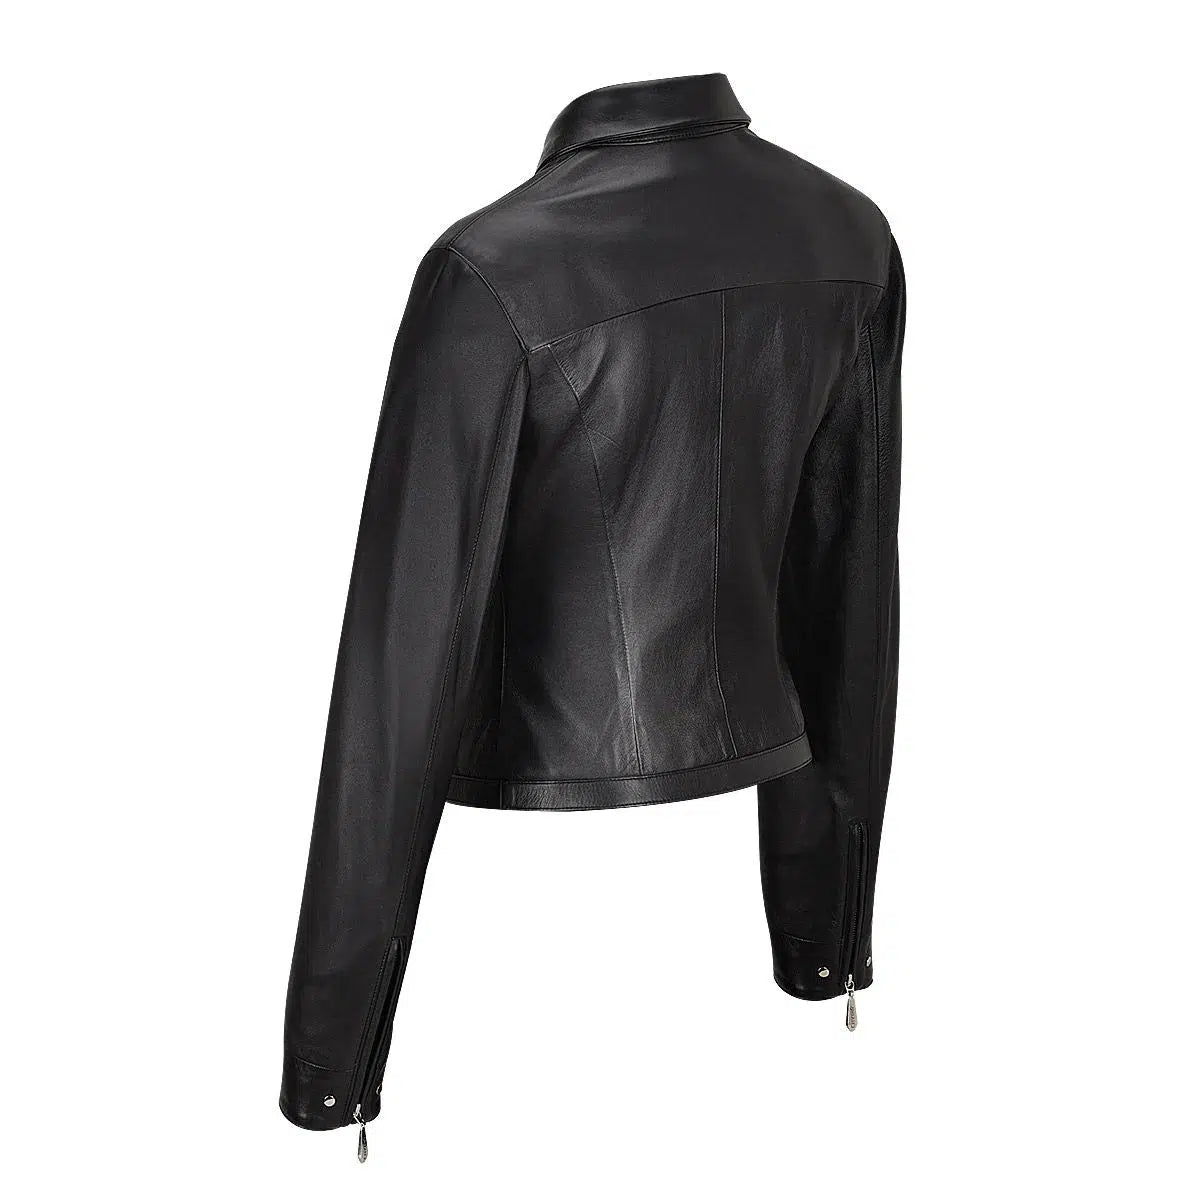 M294BOB - Cuadra black dress casual fashion sheepskin leather jacket for women-Kuet.us